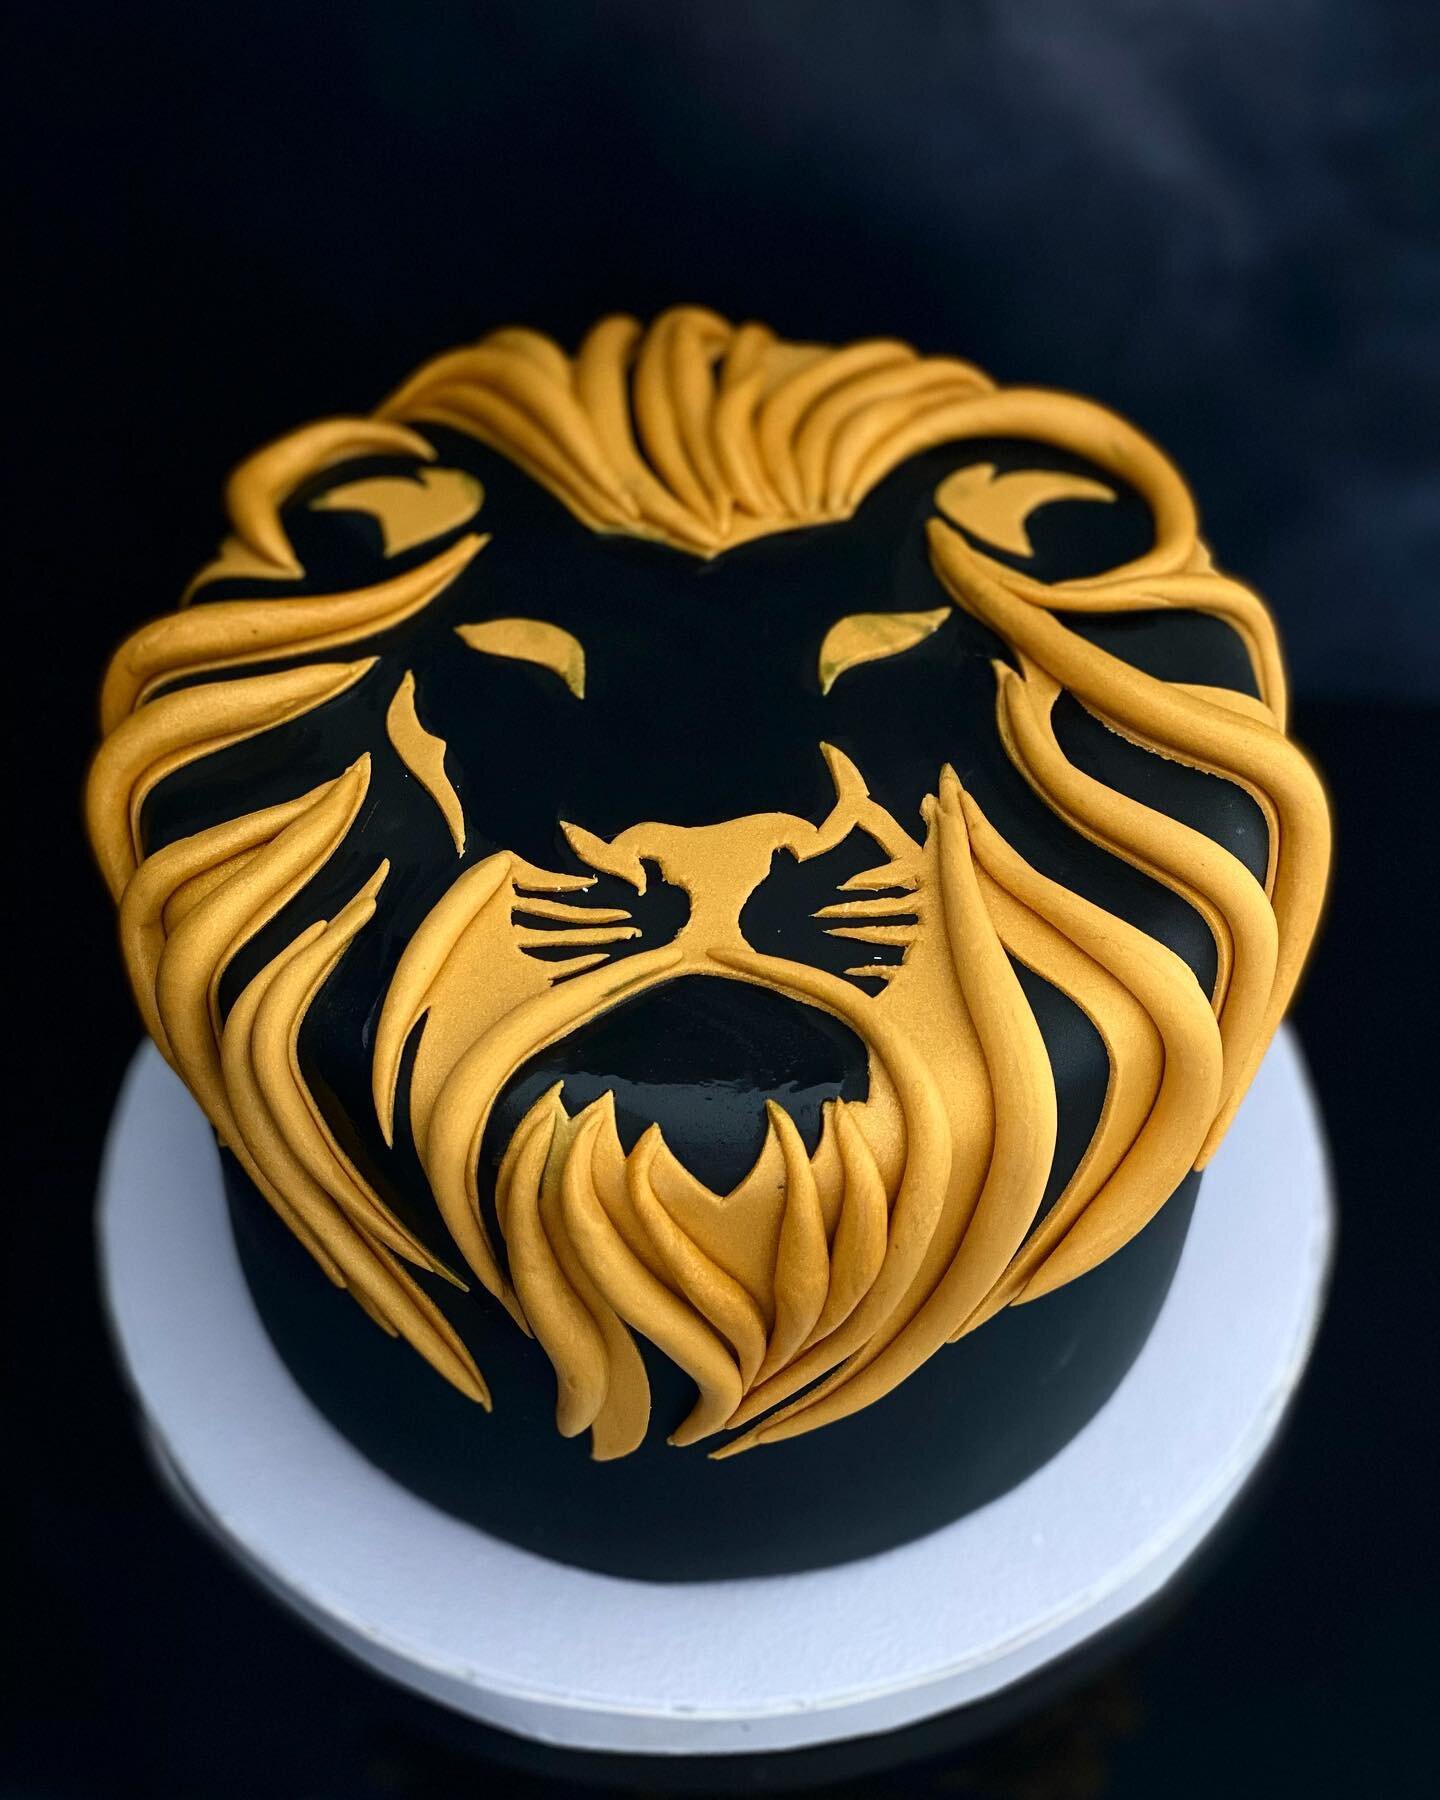 🦁 

#lion #lioncake #lionking #simba #absofcakes #celebrateeatcakeinspire #eastlosangeles #eastla #cakes #customcakes #womanownedbusiness #womanentrepreneur #smallbusiness